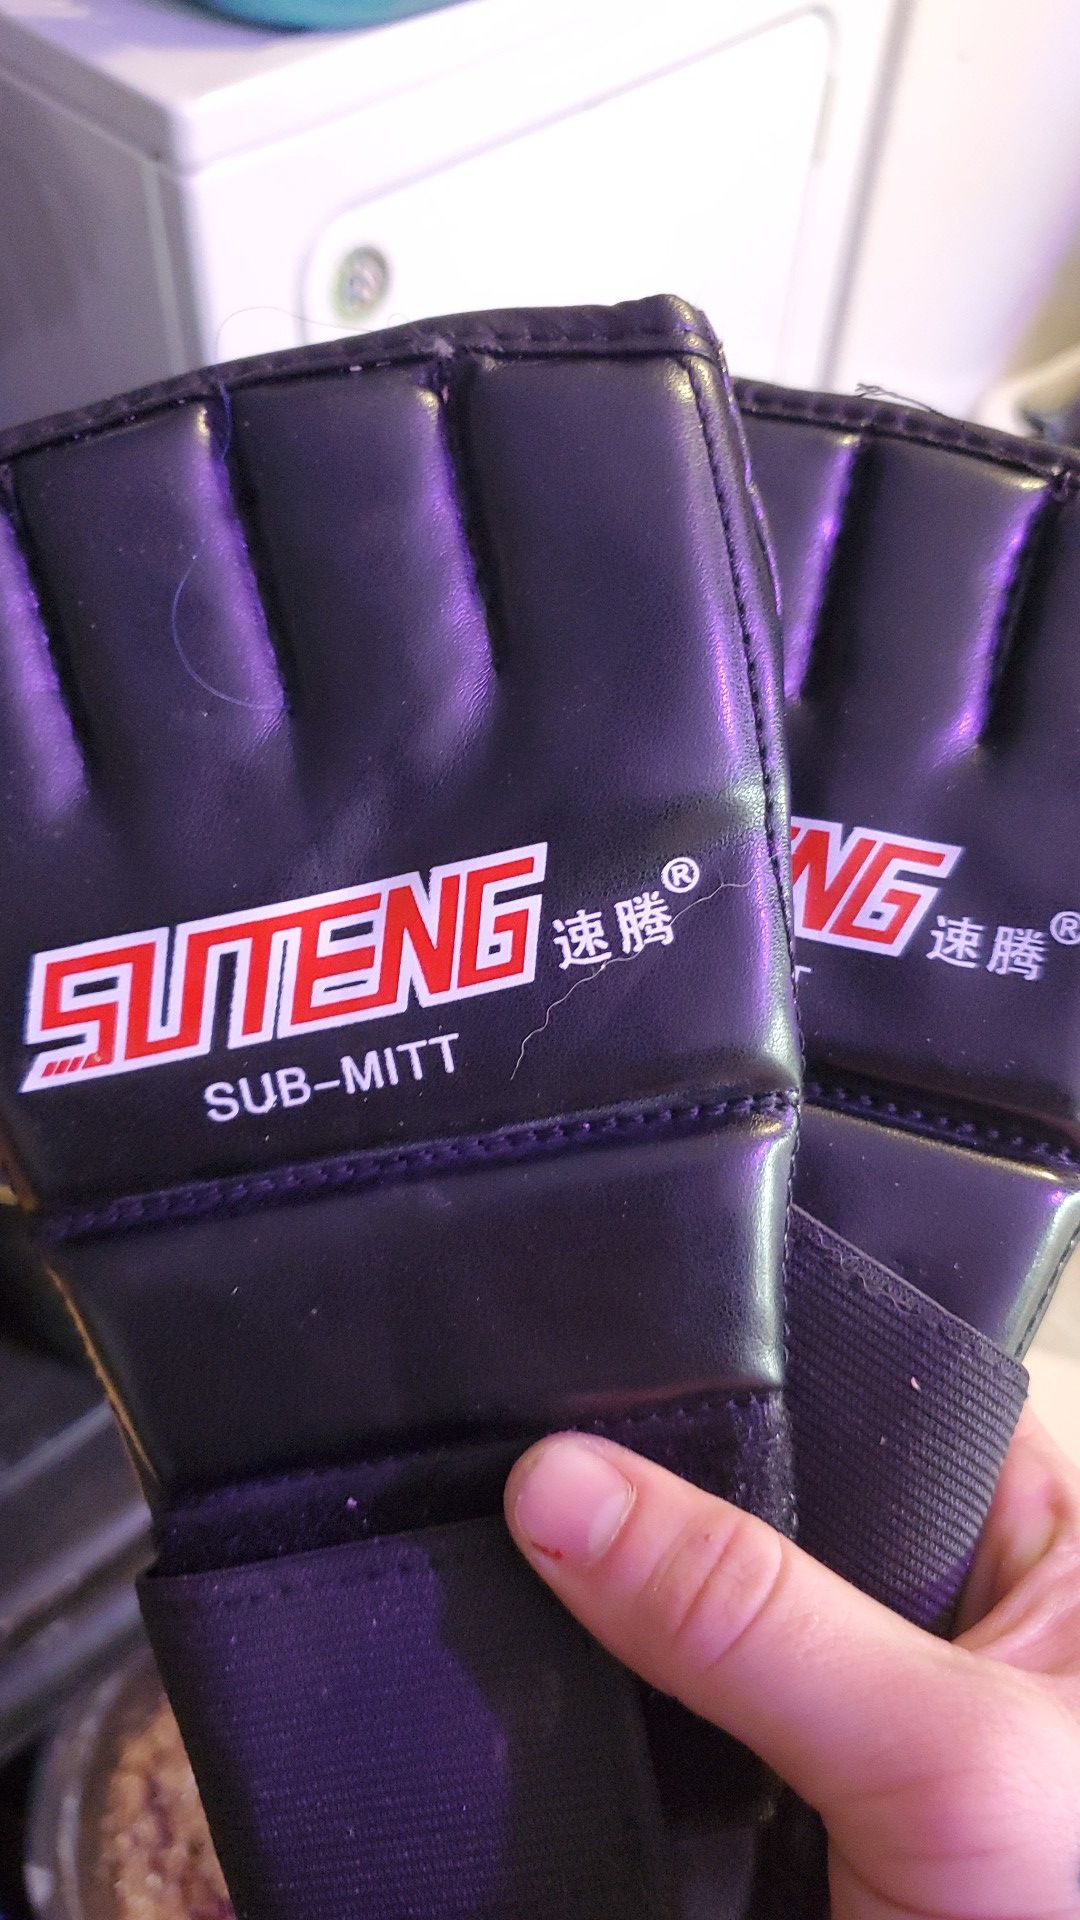 Ufc gloves brand new never used